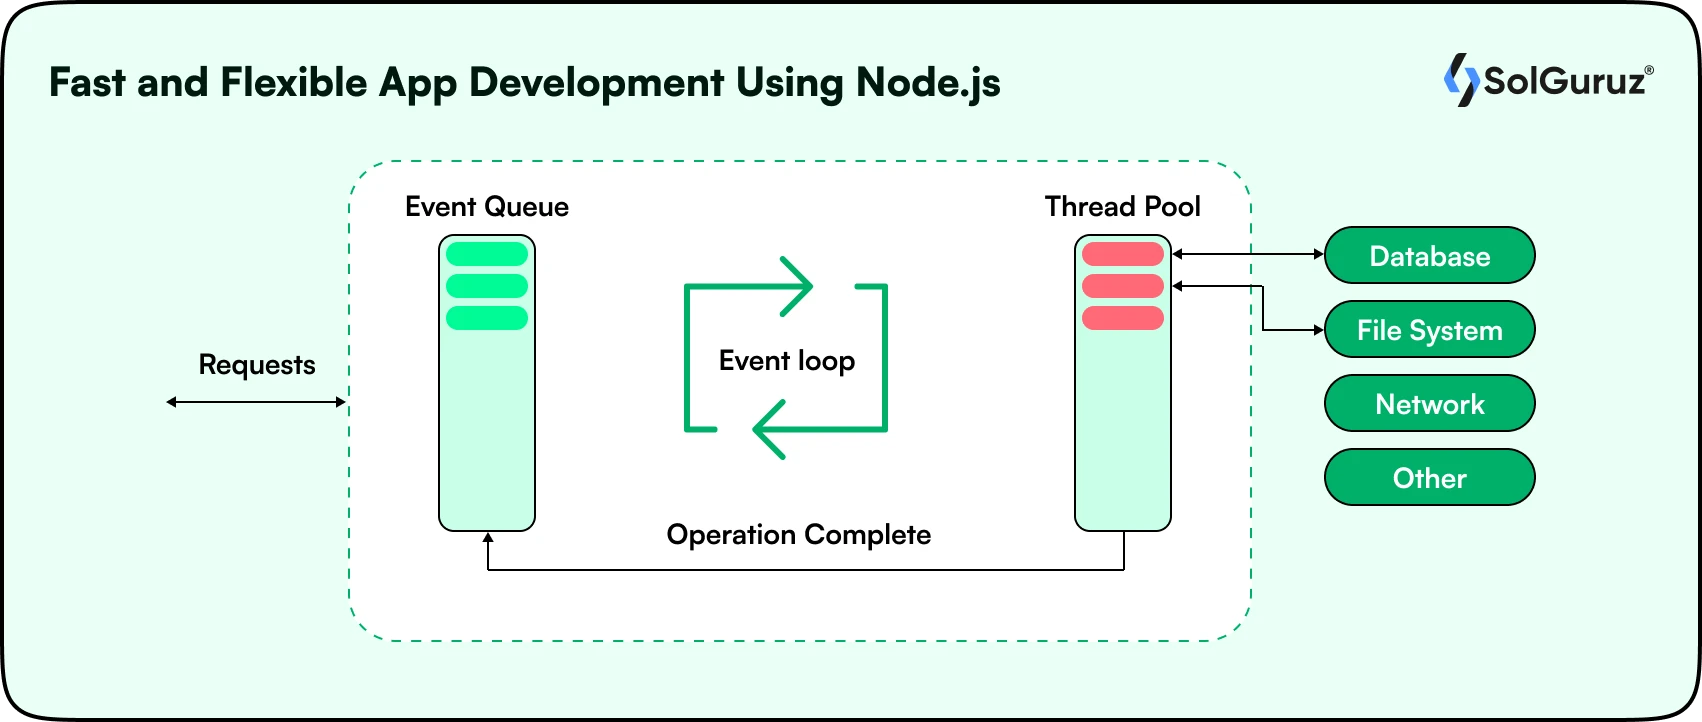 Fast and Flexible App Development Using Nodejs